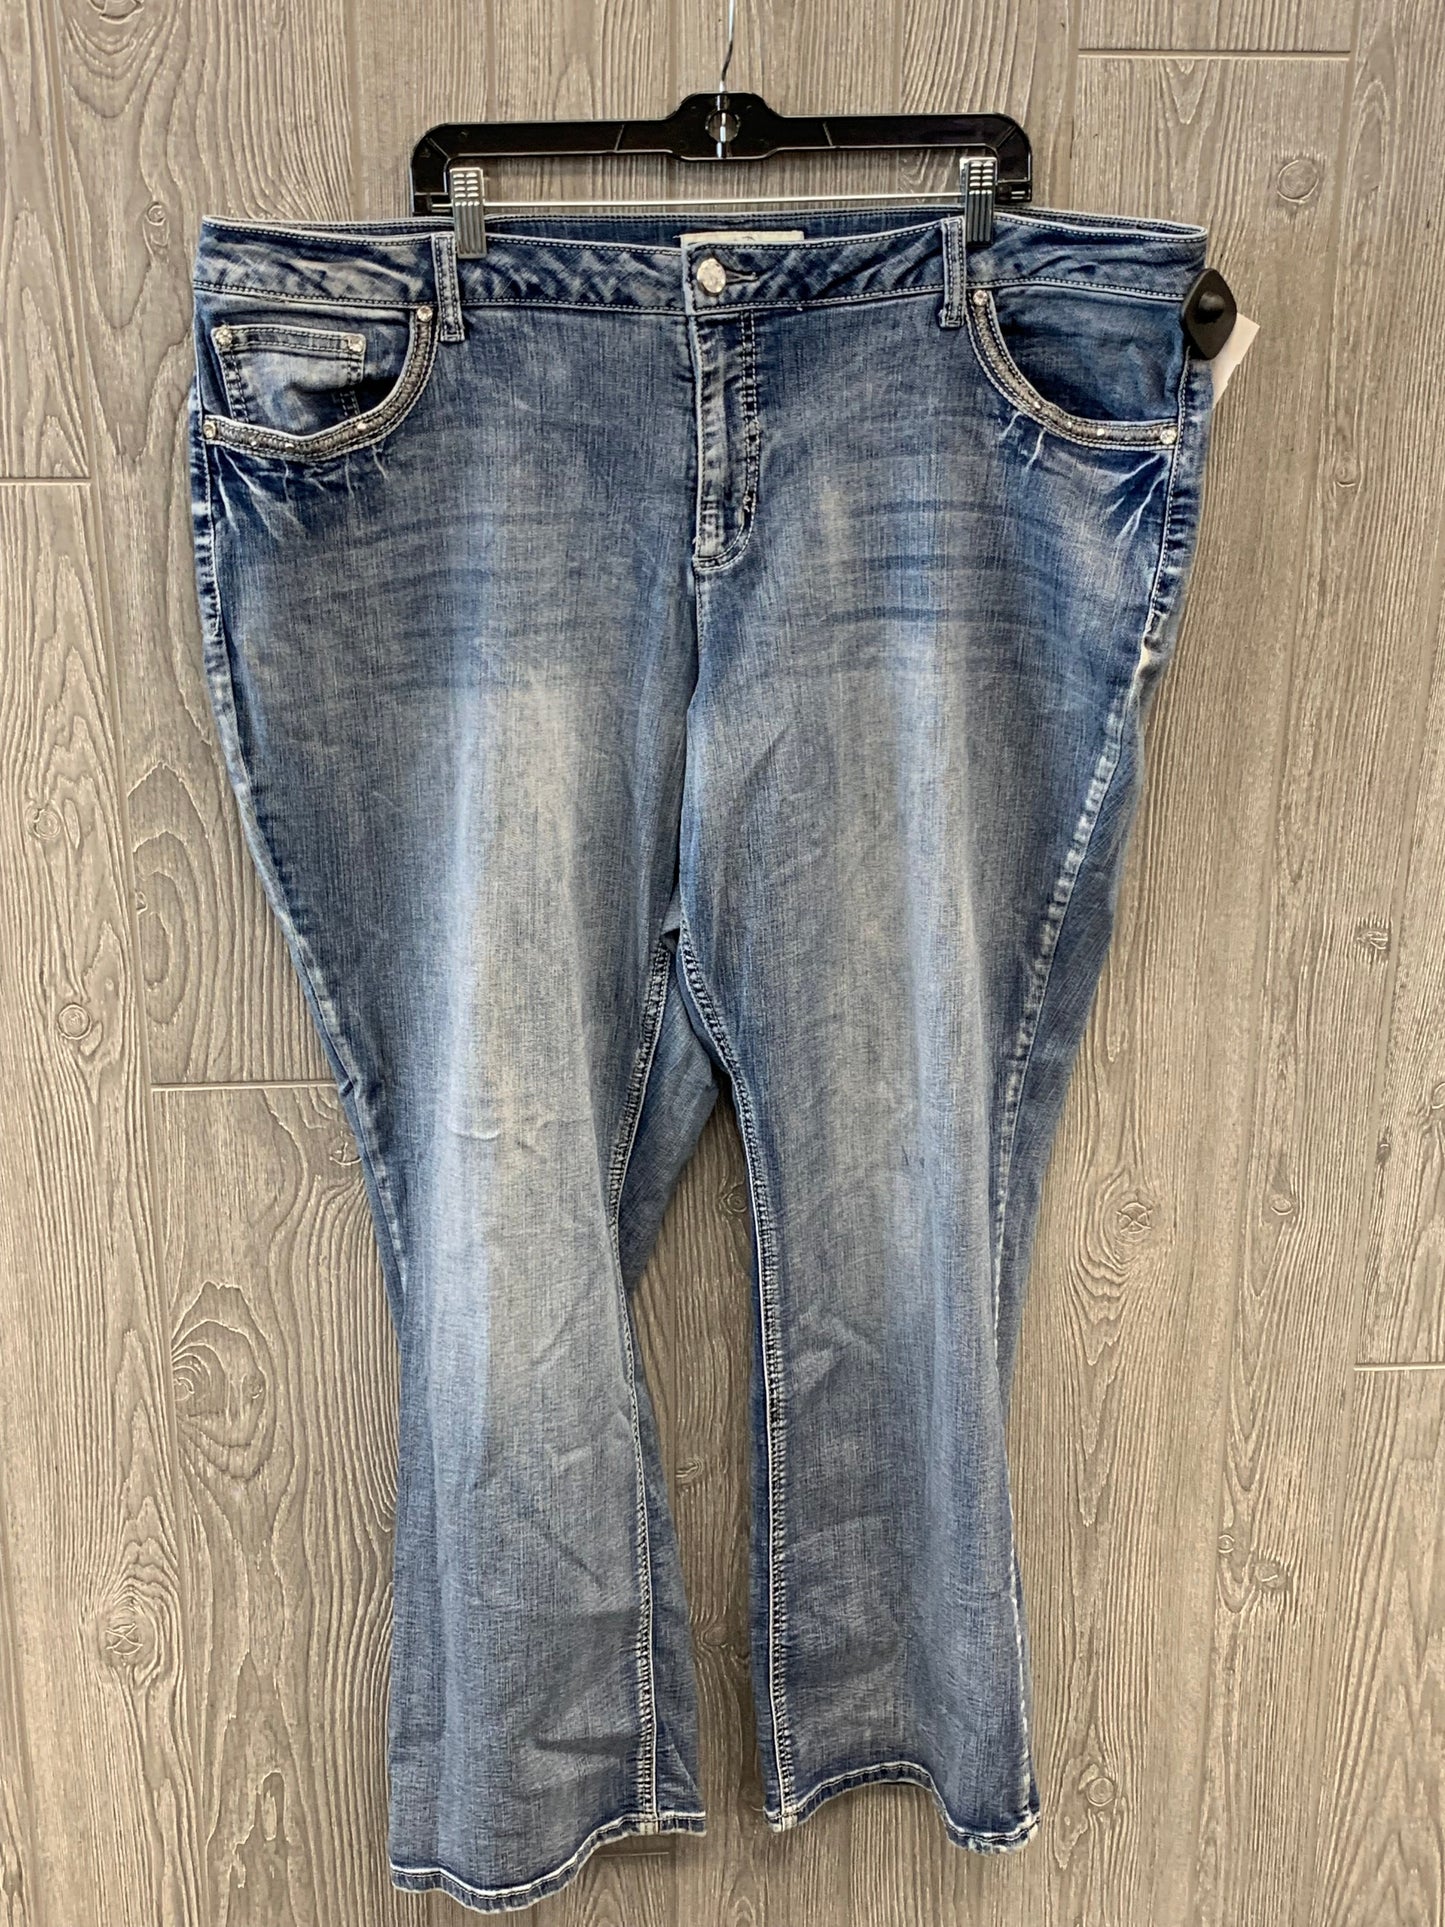 Blue Denim Jeans Flared Cato, Size 24w